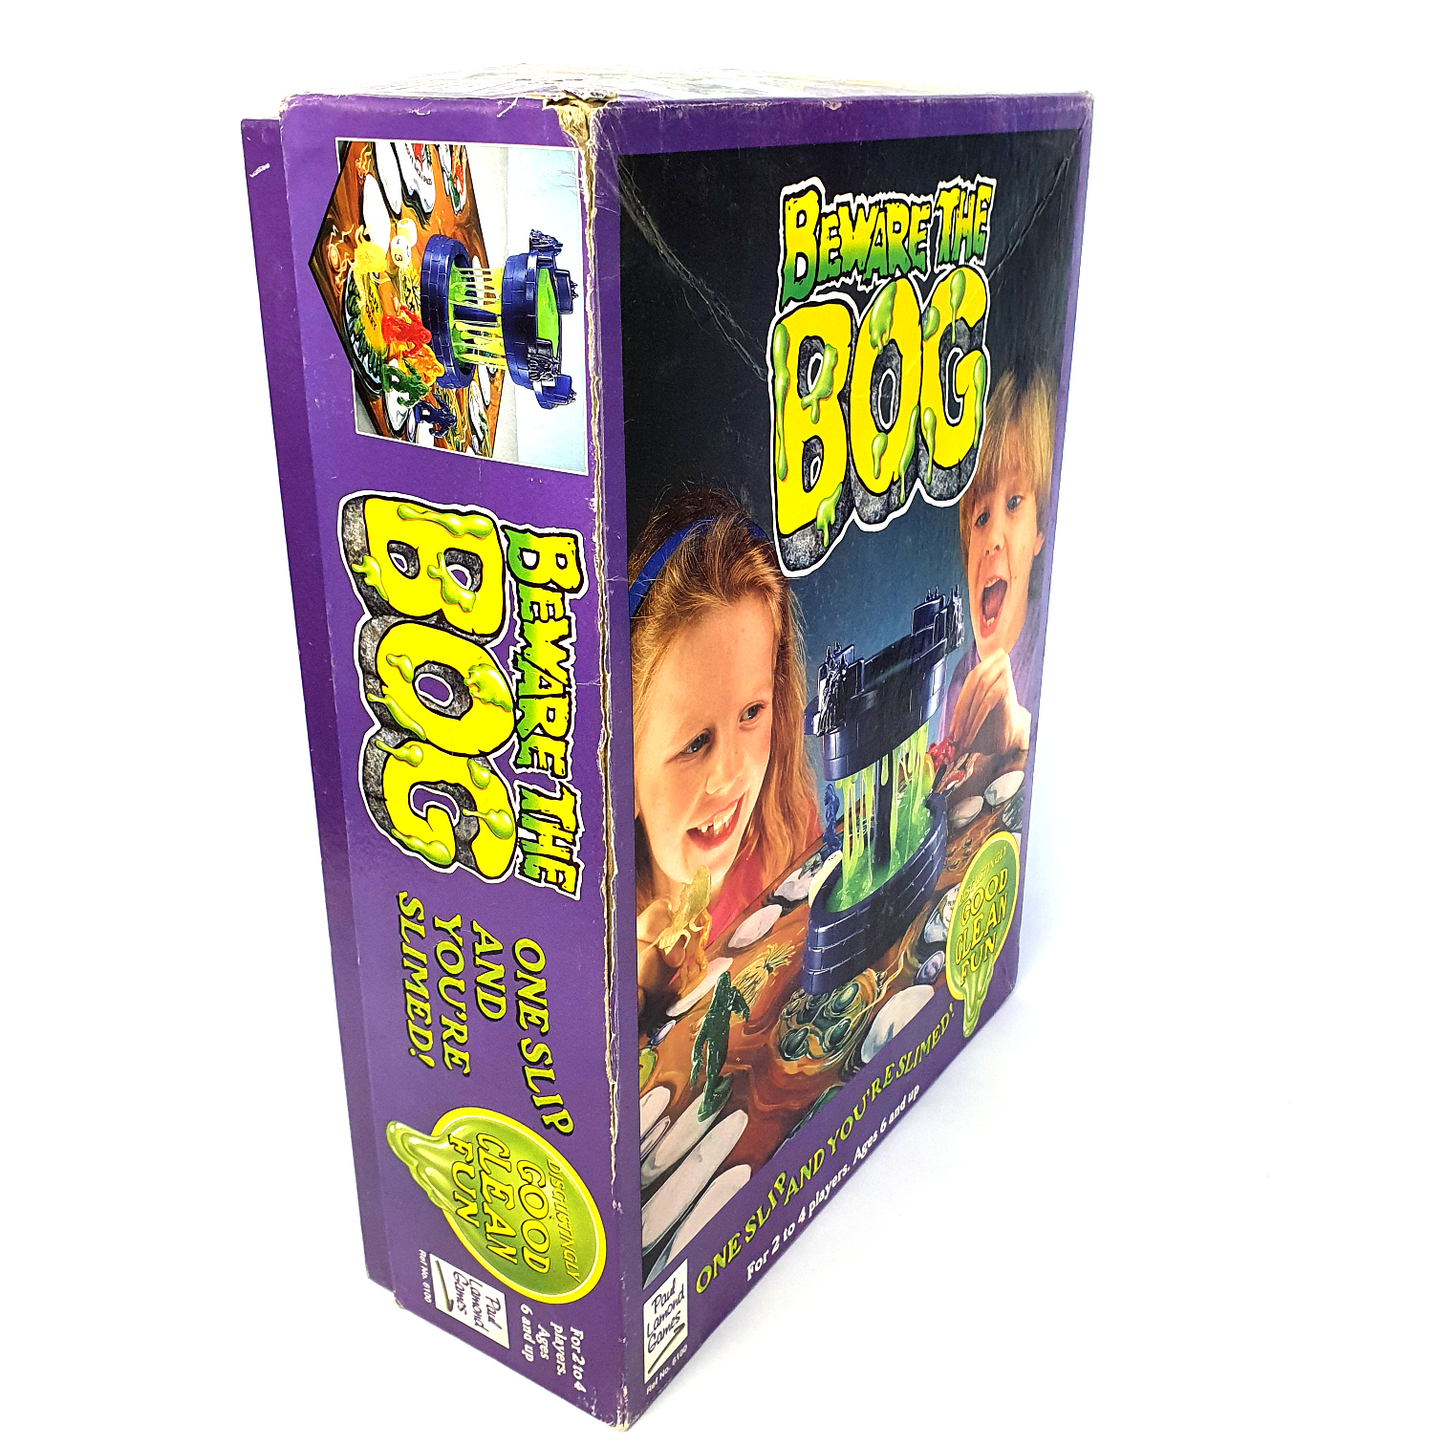 BEWARE THE BOG Vintage Board Game ☆ 1991 Original Boxed Paul Lamond Games Near Complete No Slime